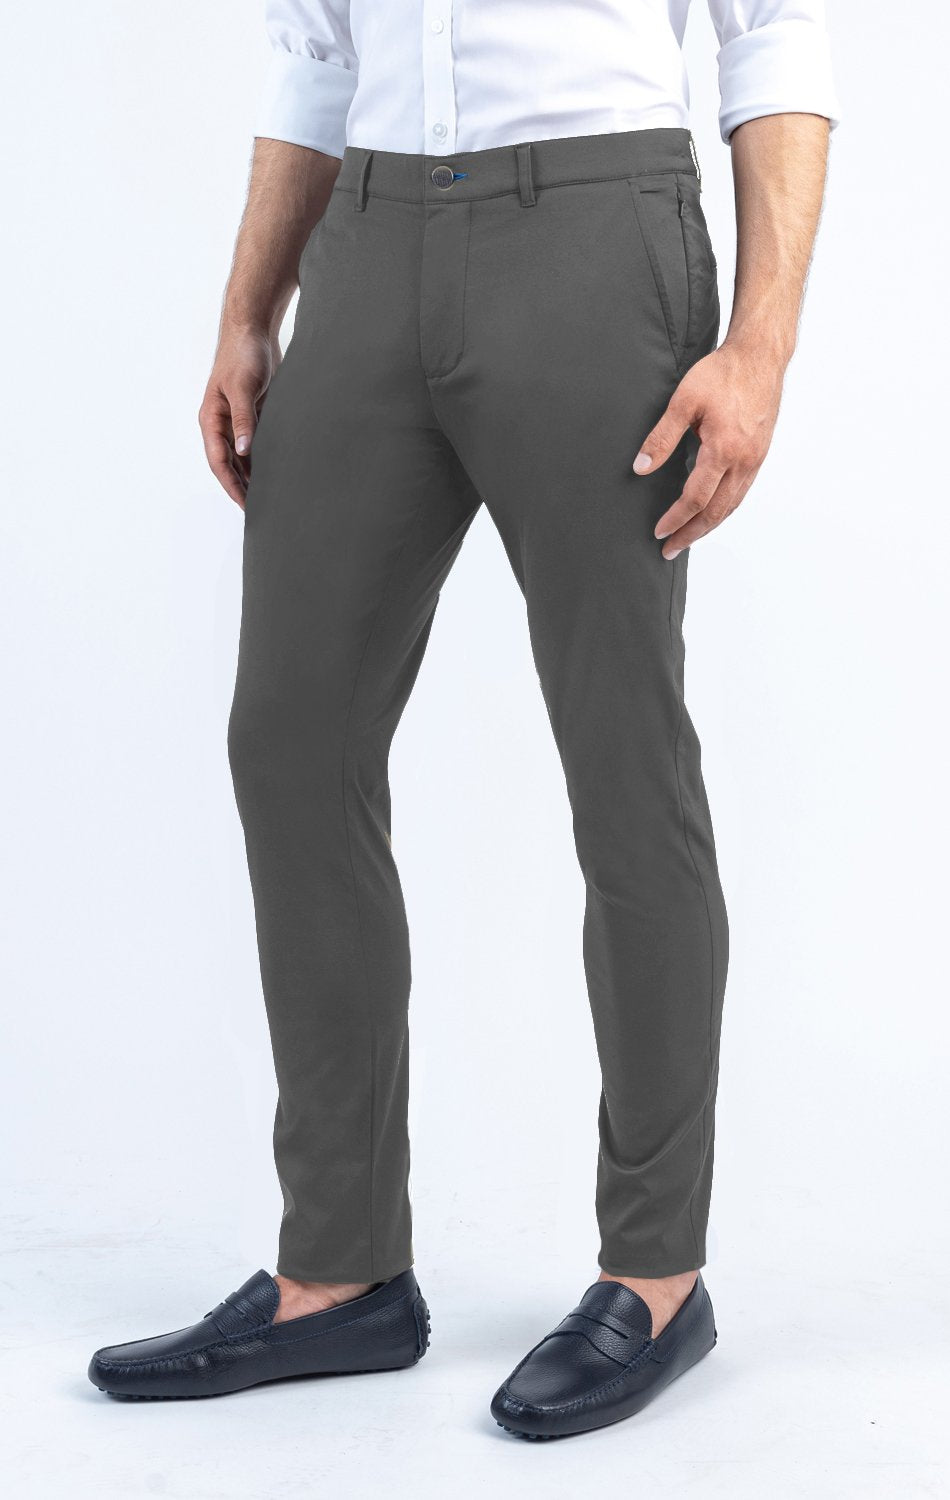 Performance Dress Pants (Charcoal - Tailored Slacks)